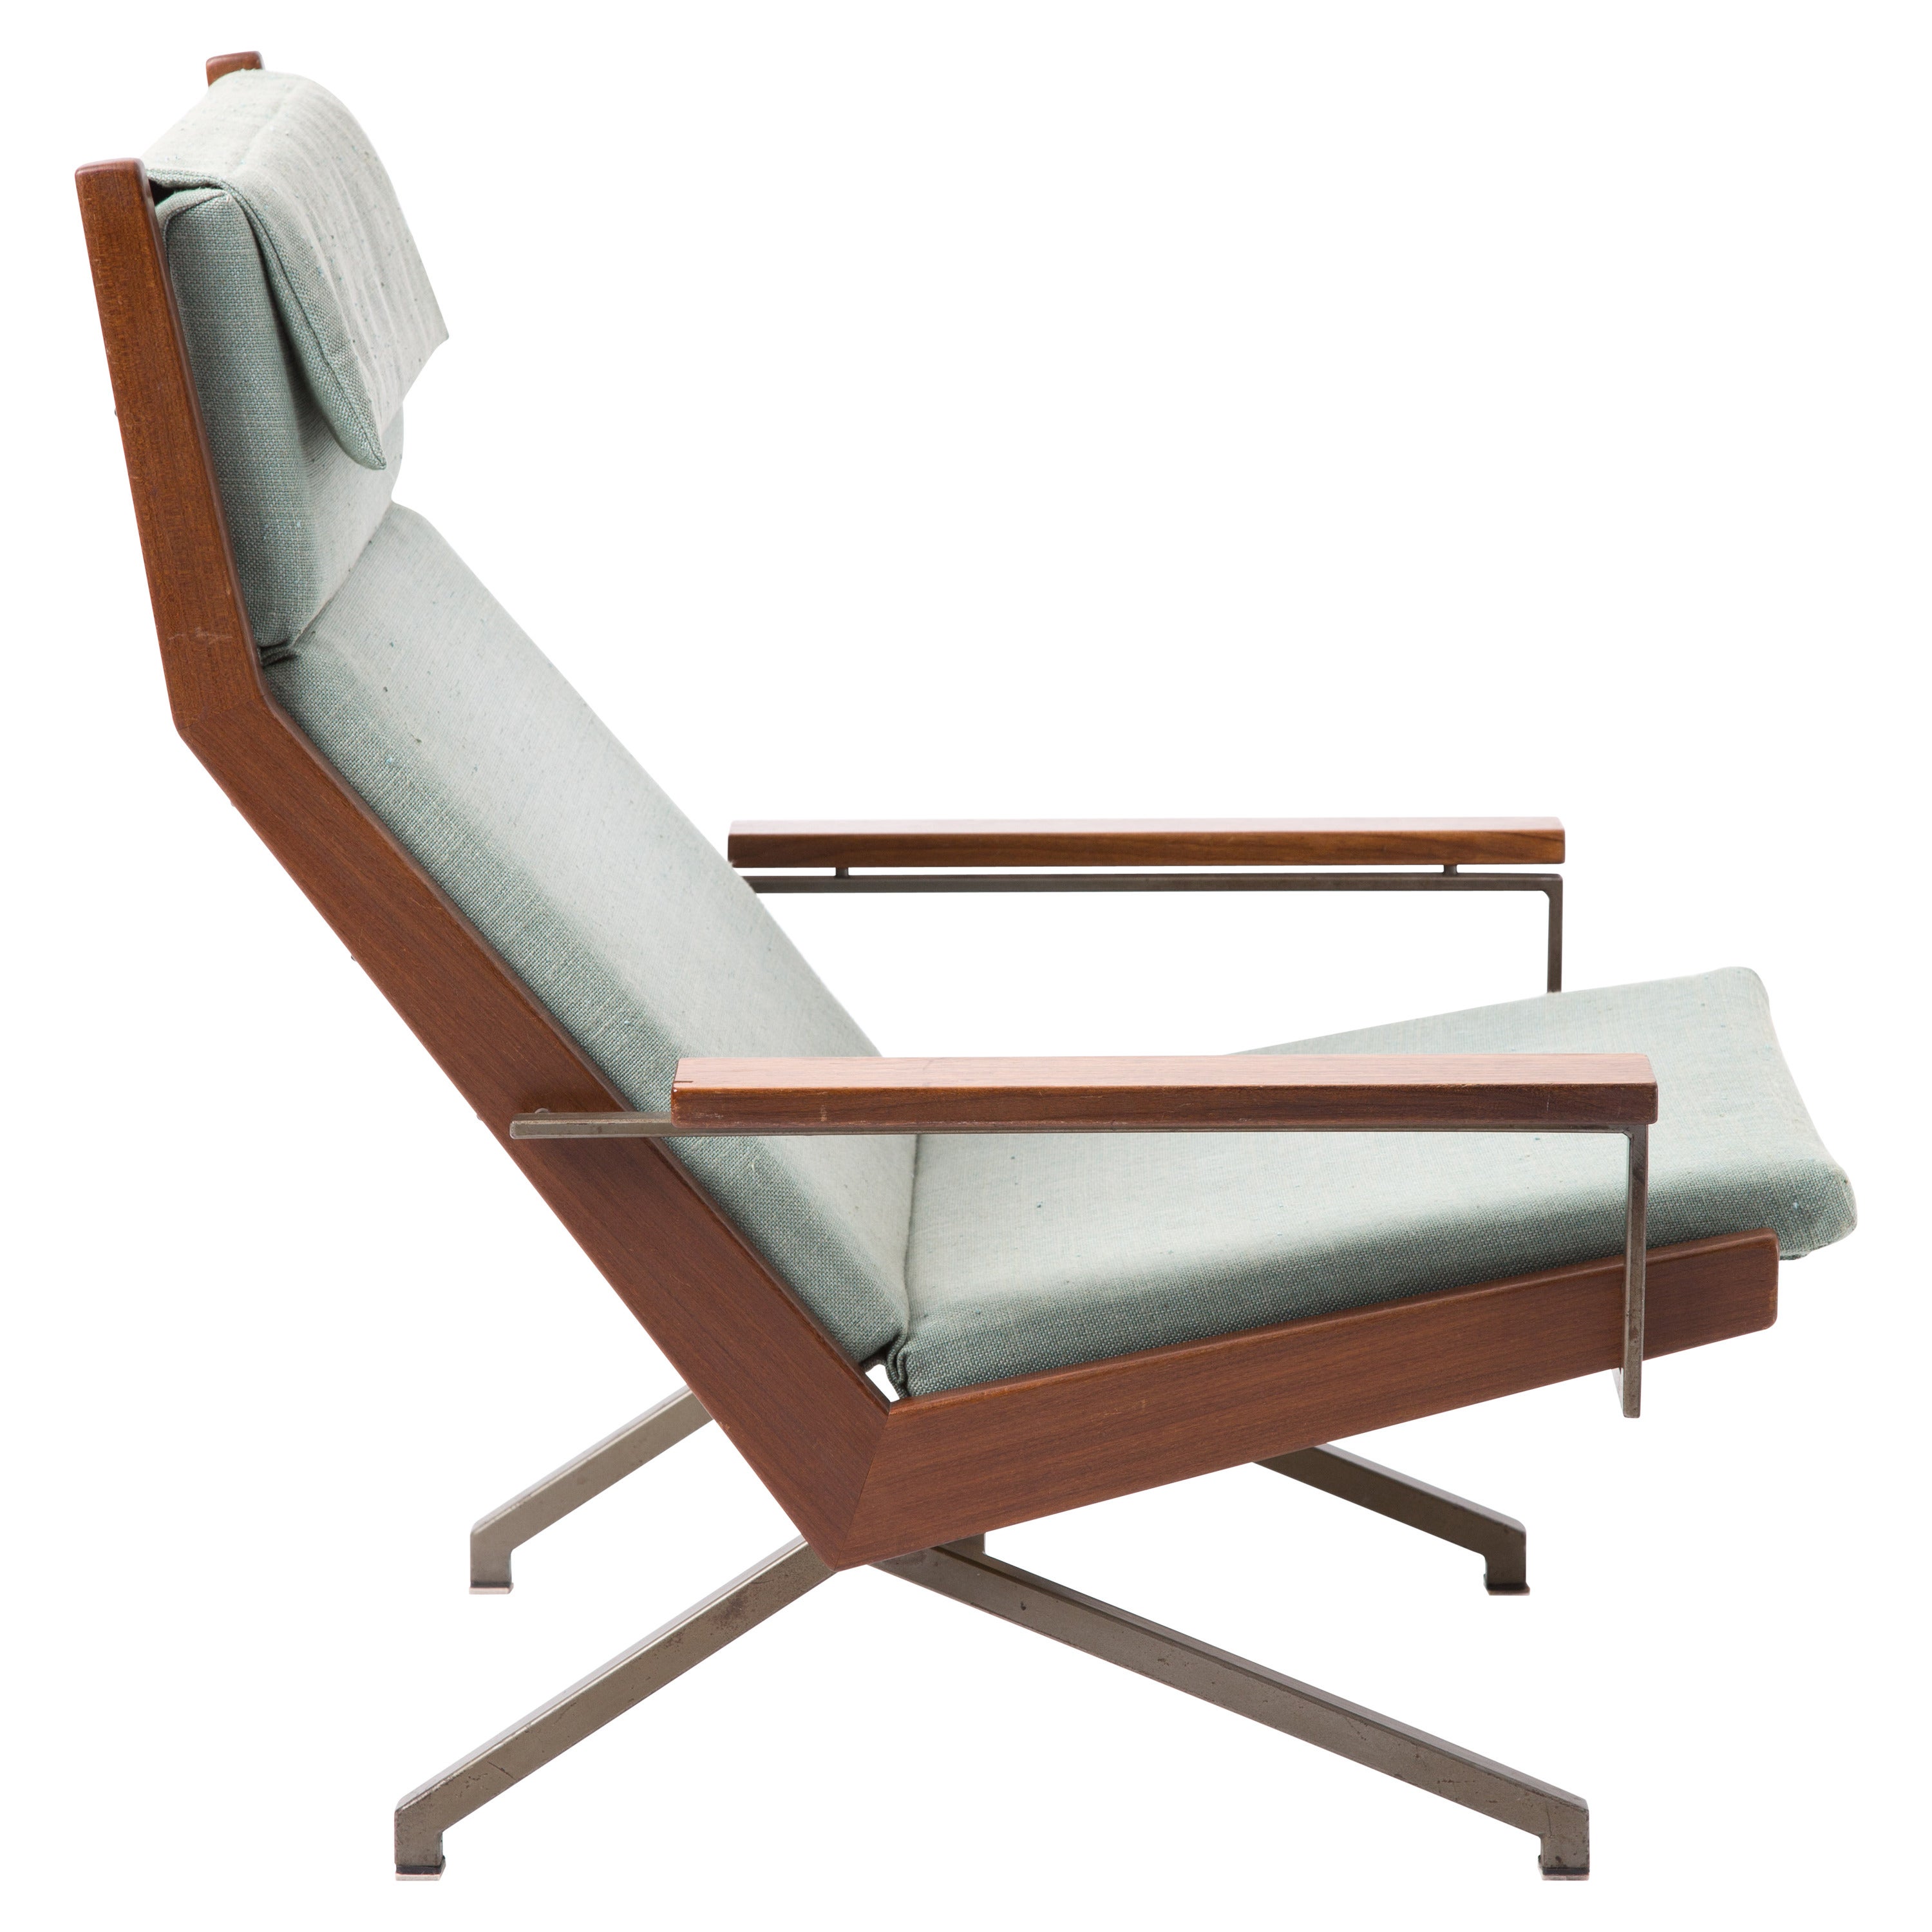 Rob Parry "Lotus" Dutch Design Gelderland Lounge Chair For Sale